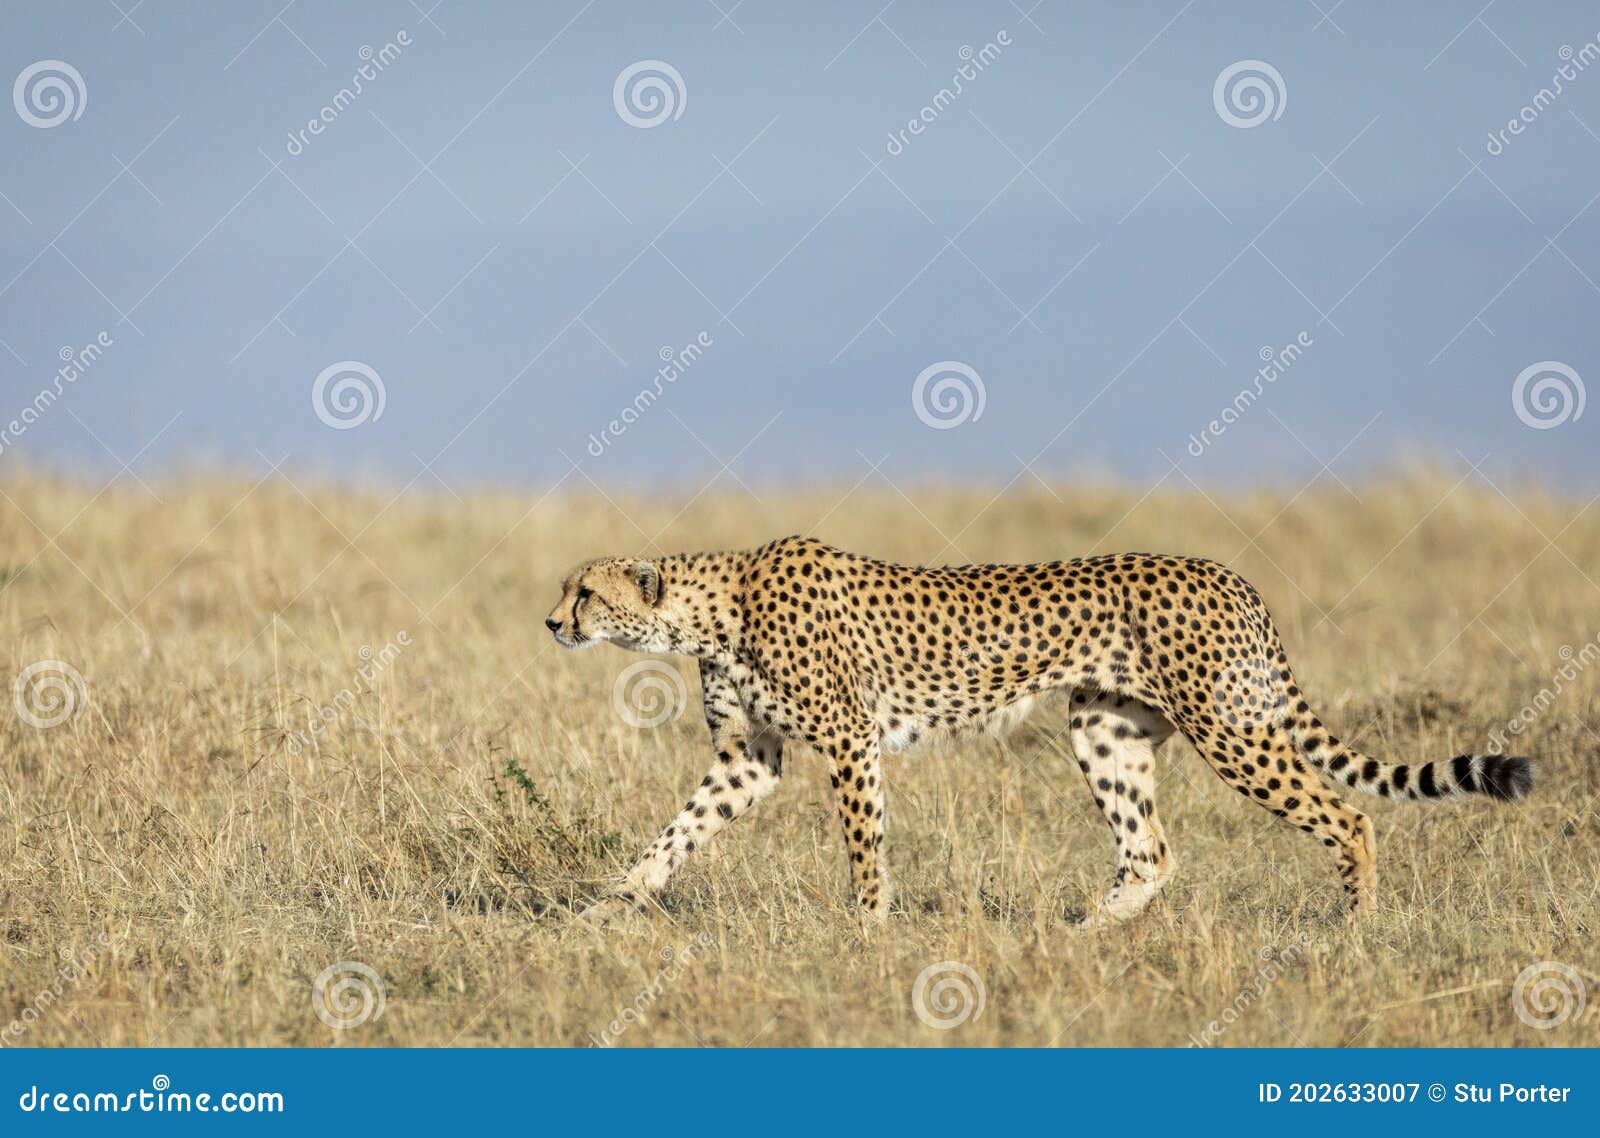 Adult cheetah walking in dry grass in Masai Mara in Kenya. Adult cheetah walking in the grassy plains of Masai Mara in Kenya